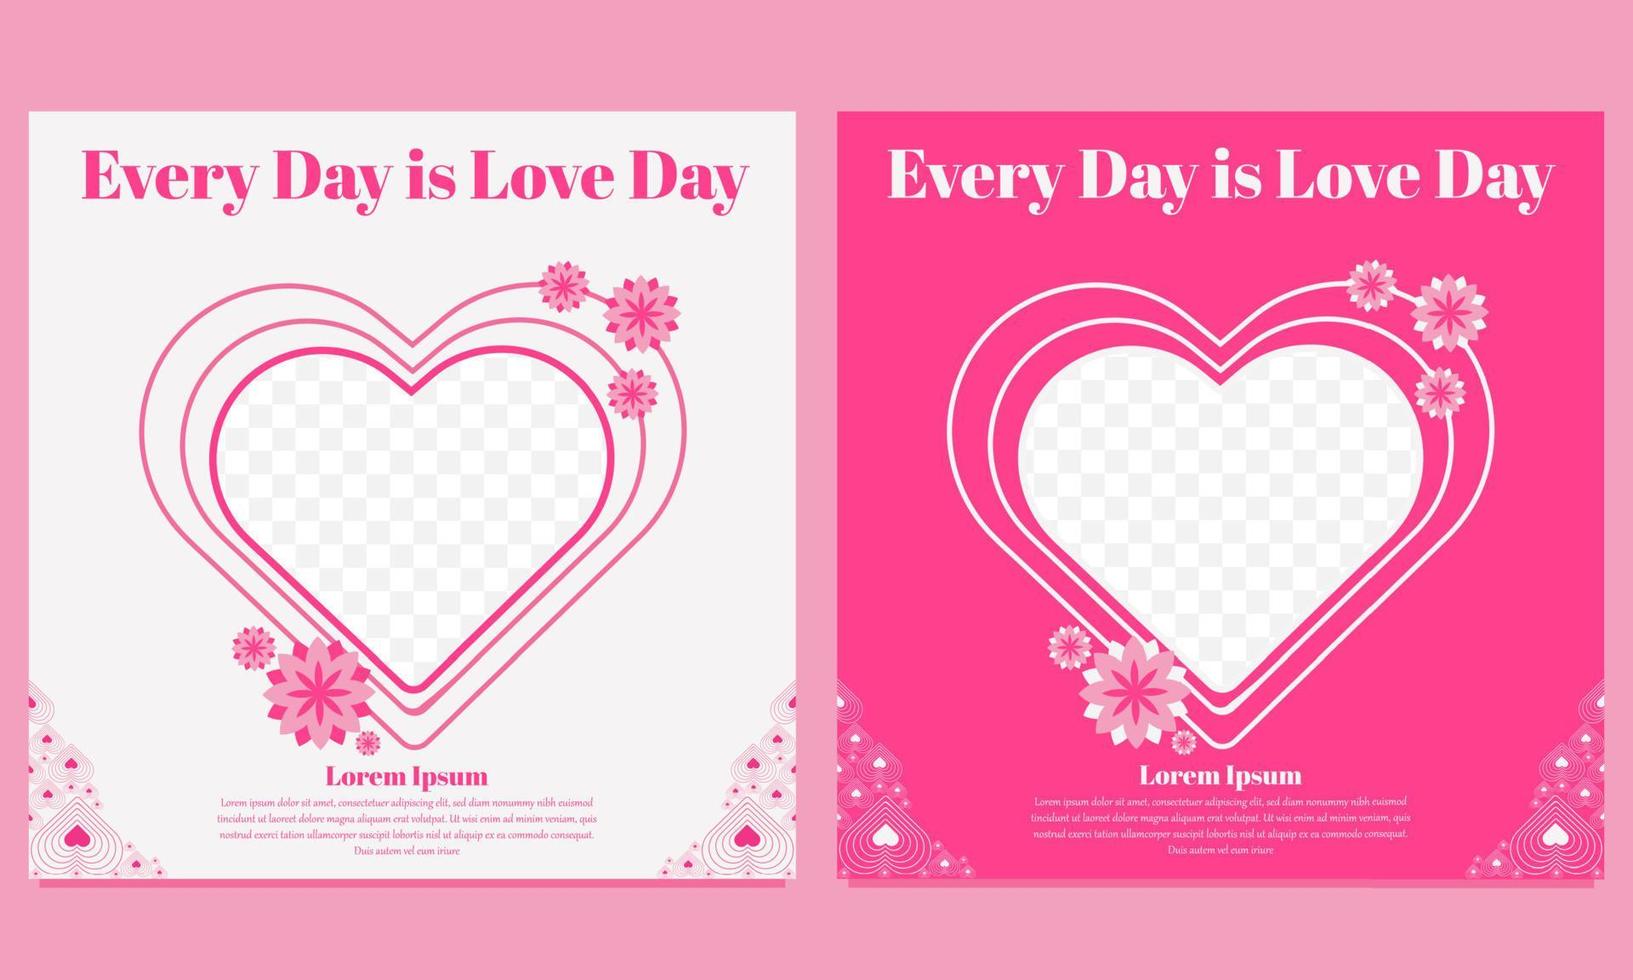 roze liefde Valentijnsdag social media postsjabloon vector